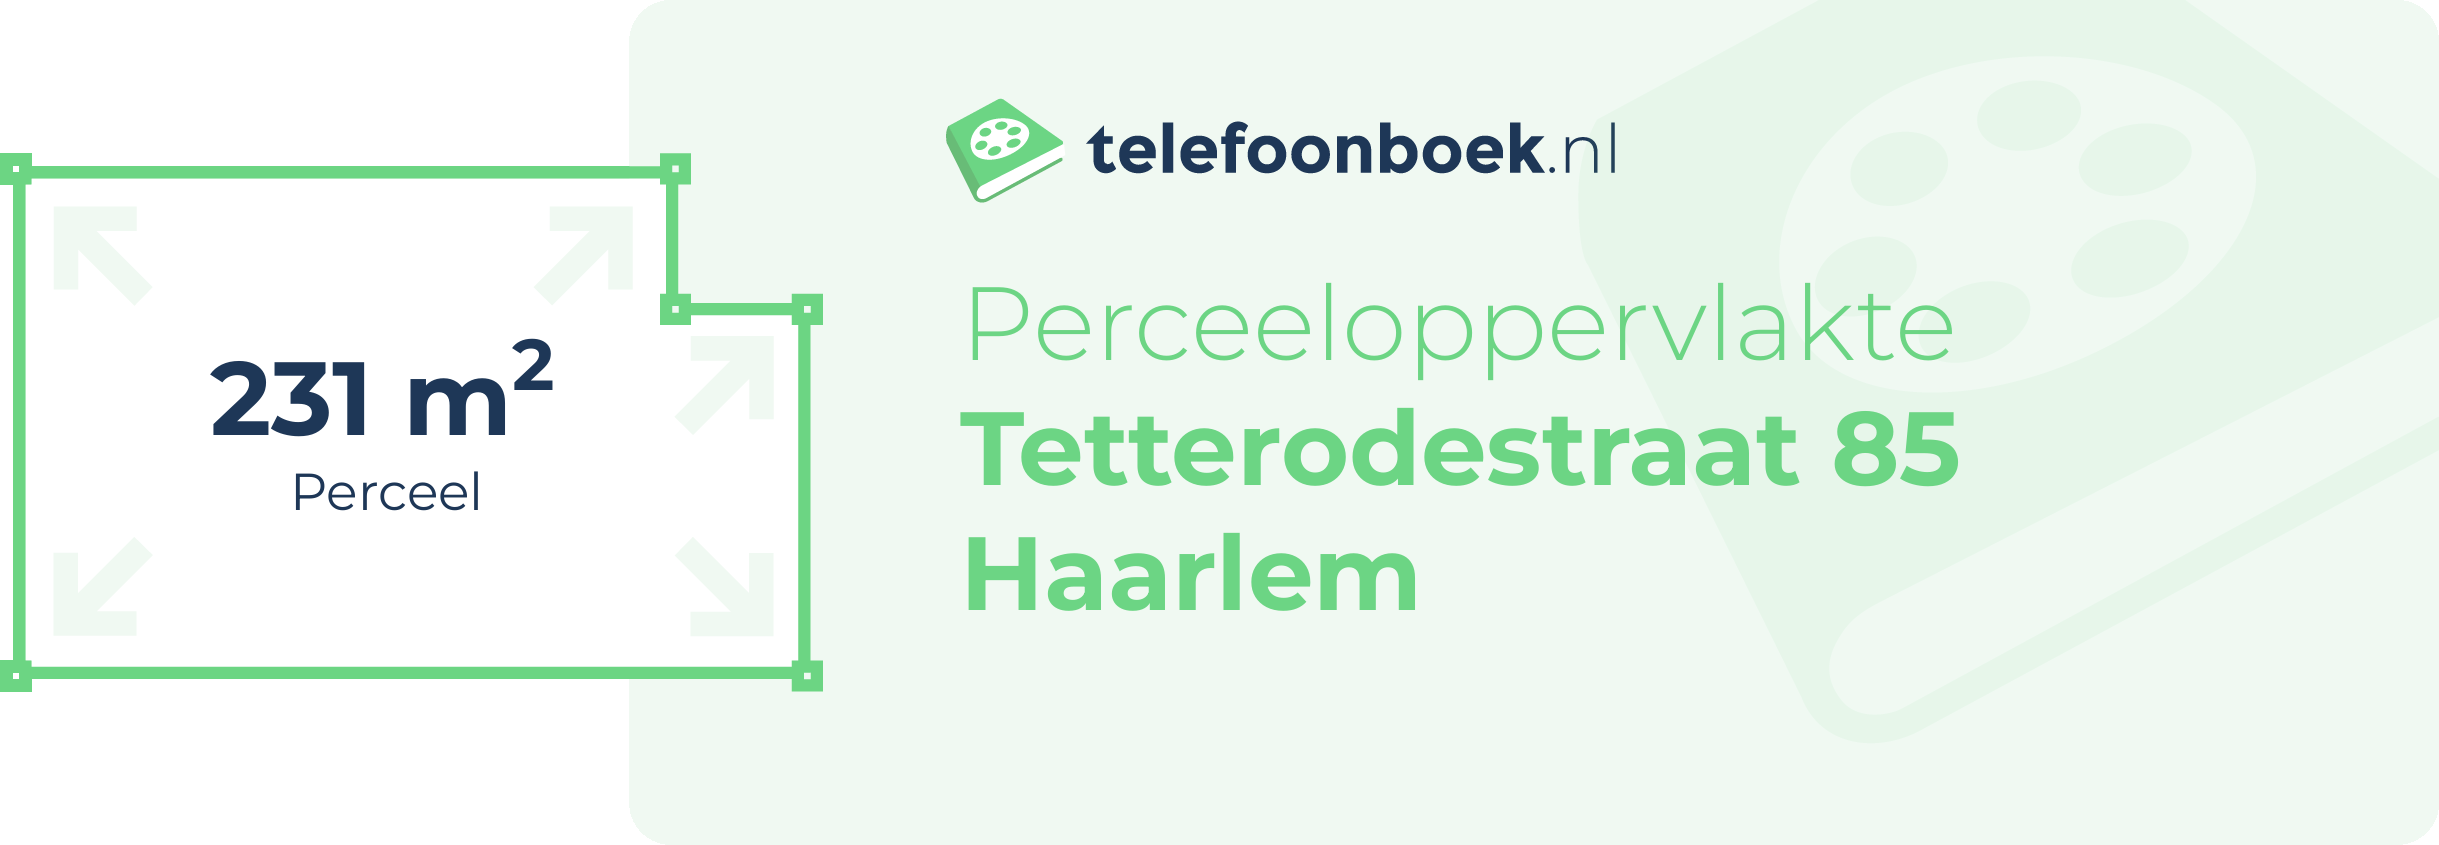 Perceeloppervlakte Tetterodestraat 85 Haarlem